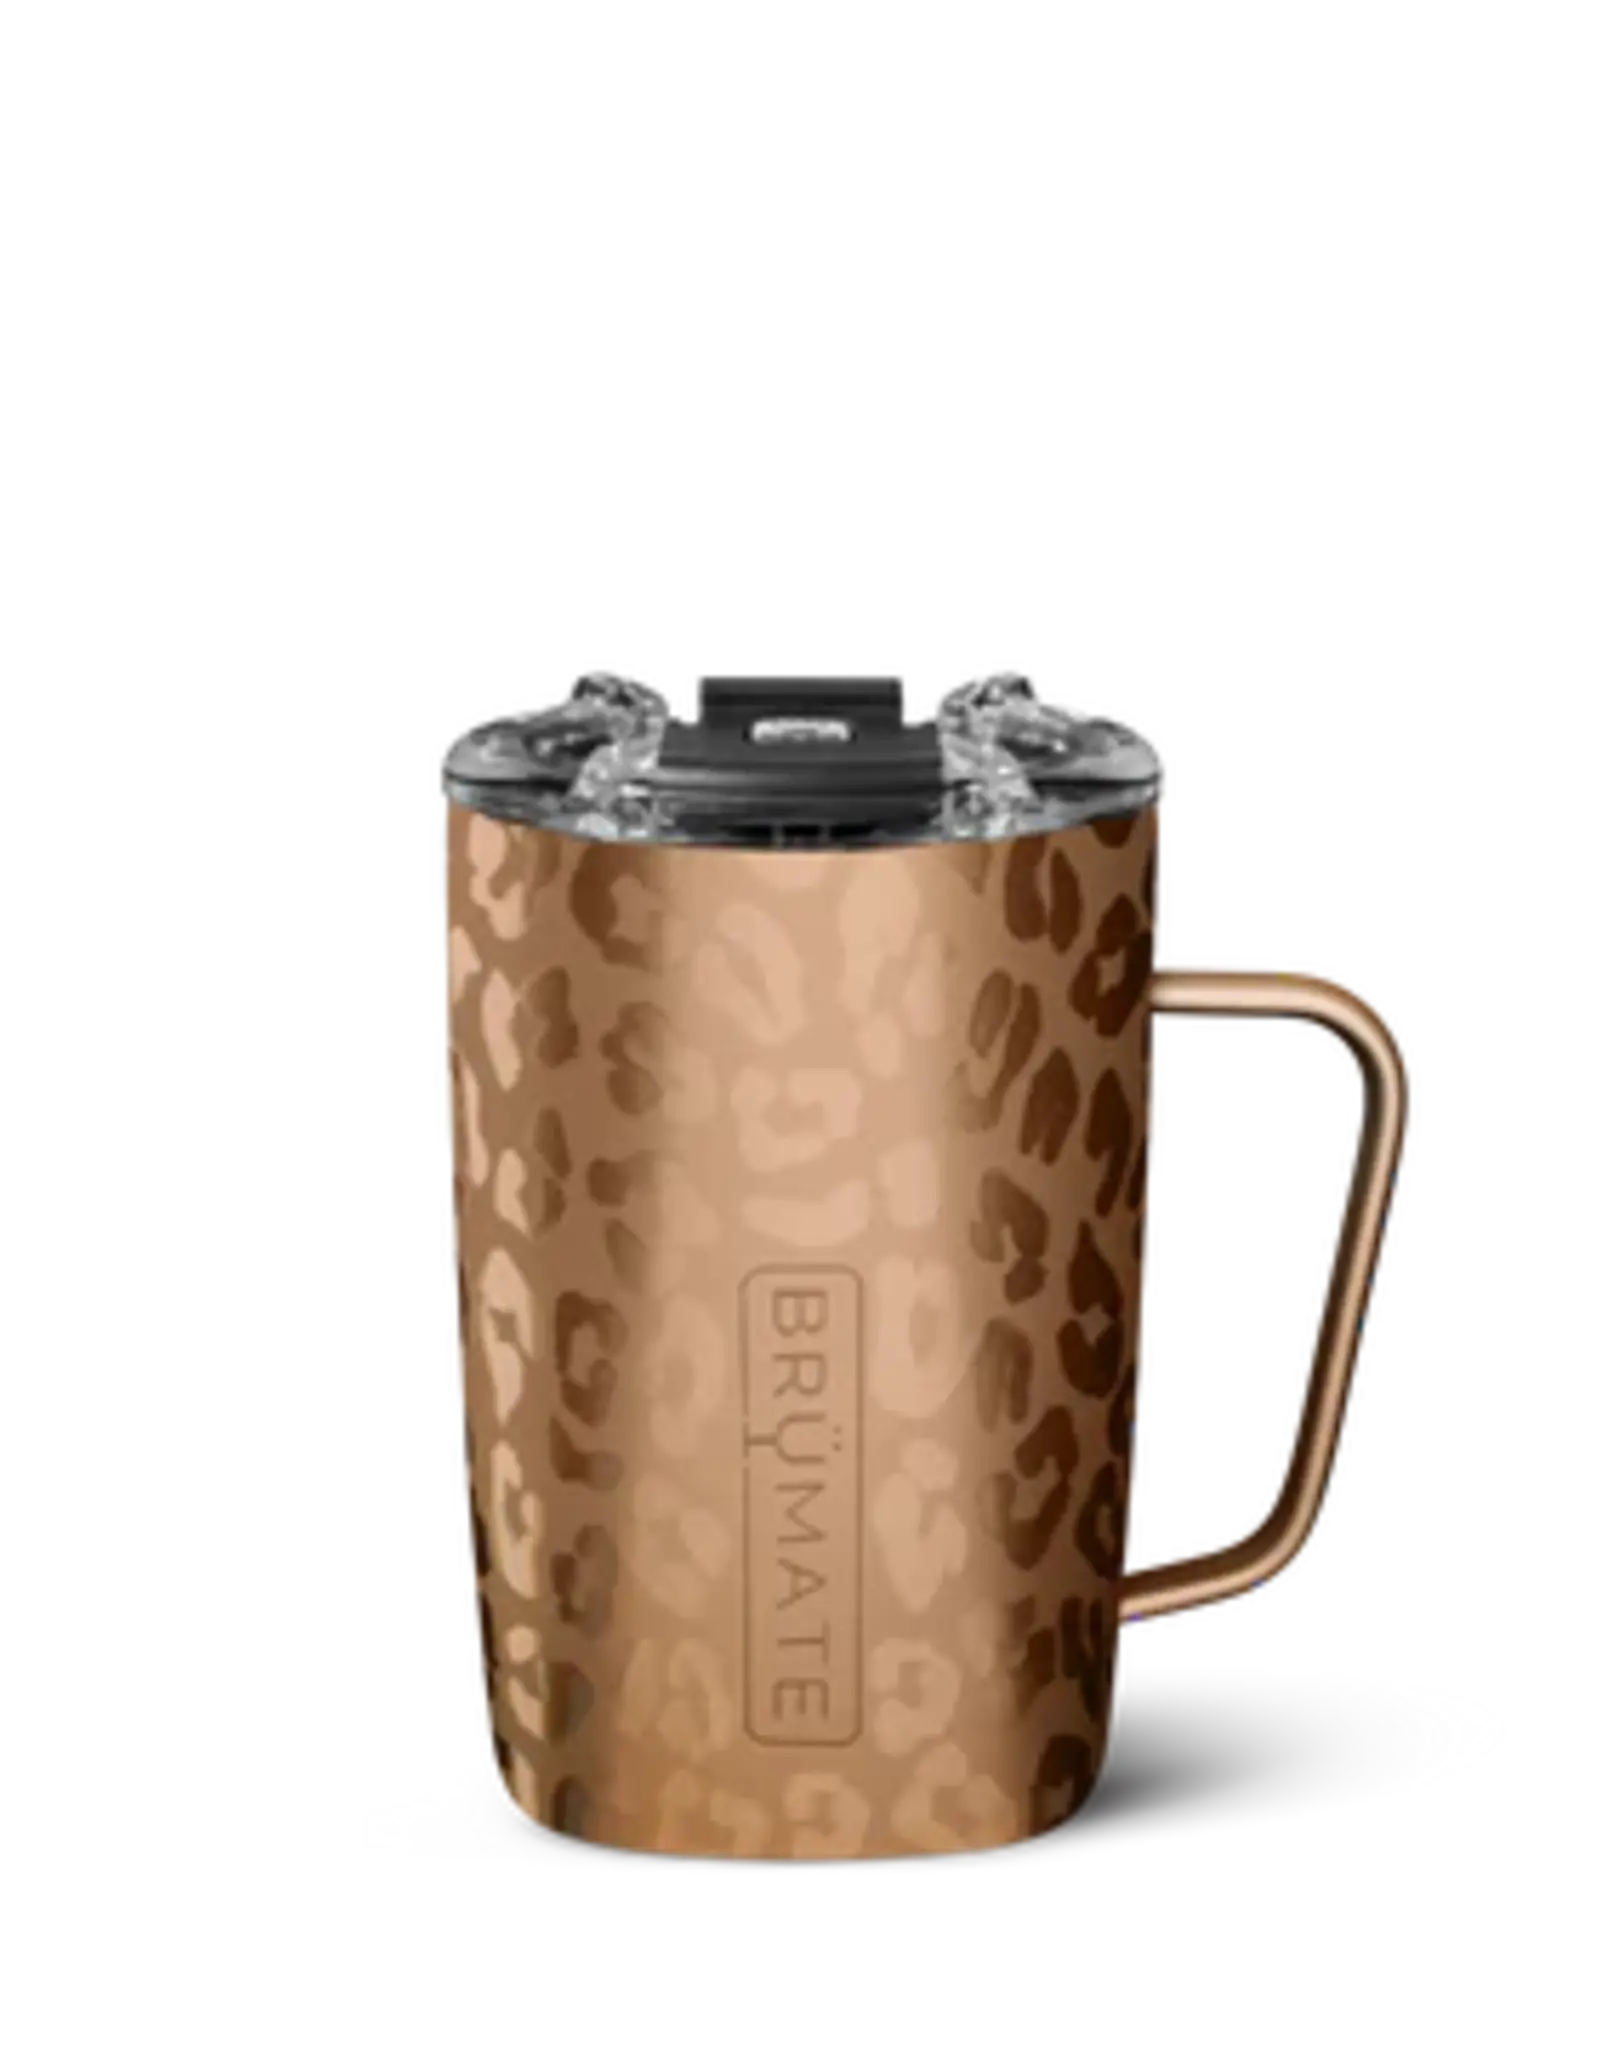 Brumate 16 oz Toddy Coffee Cup